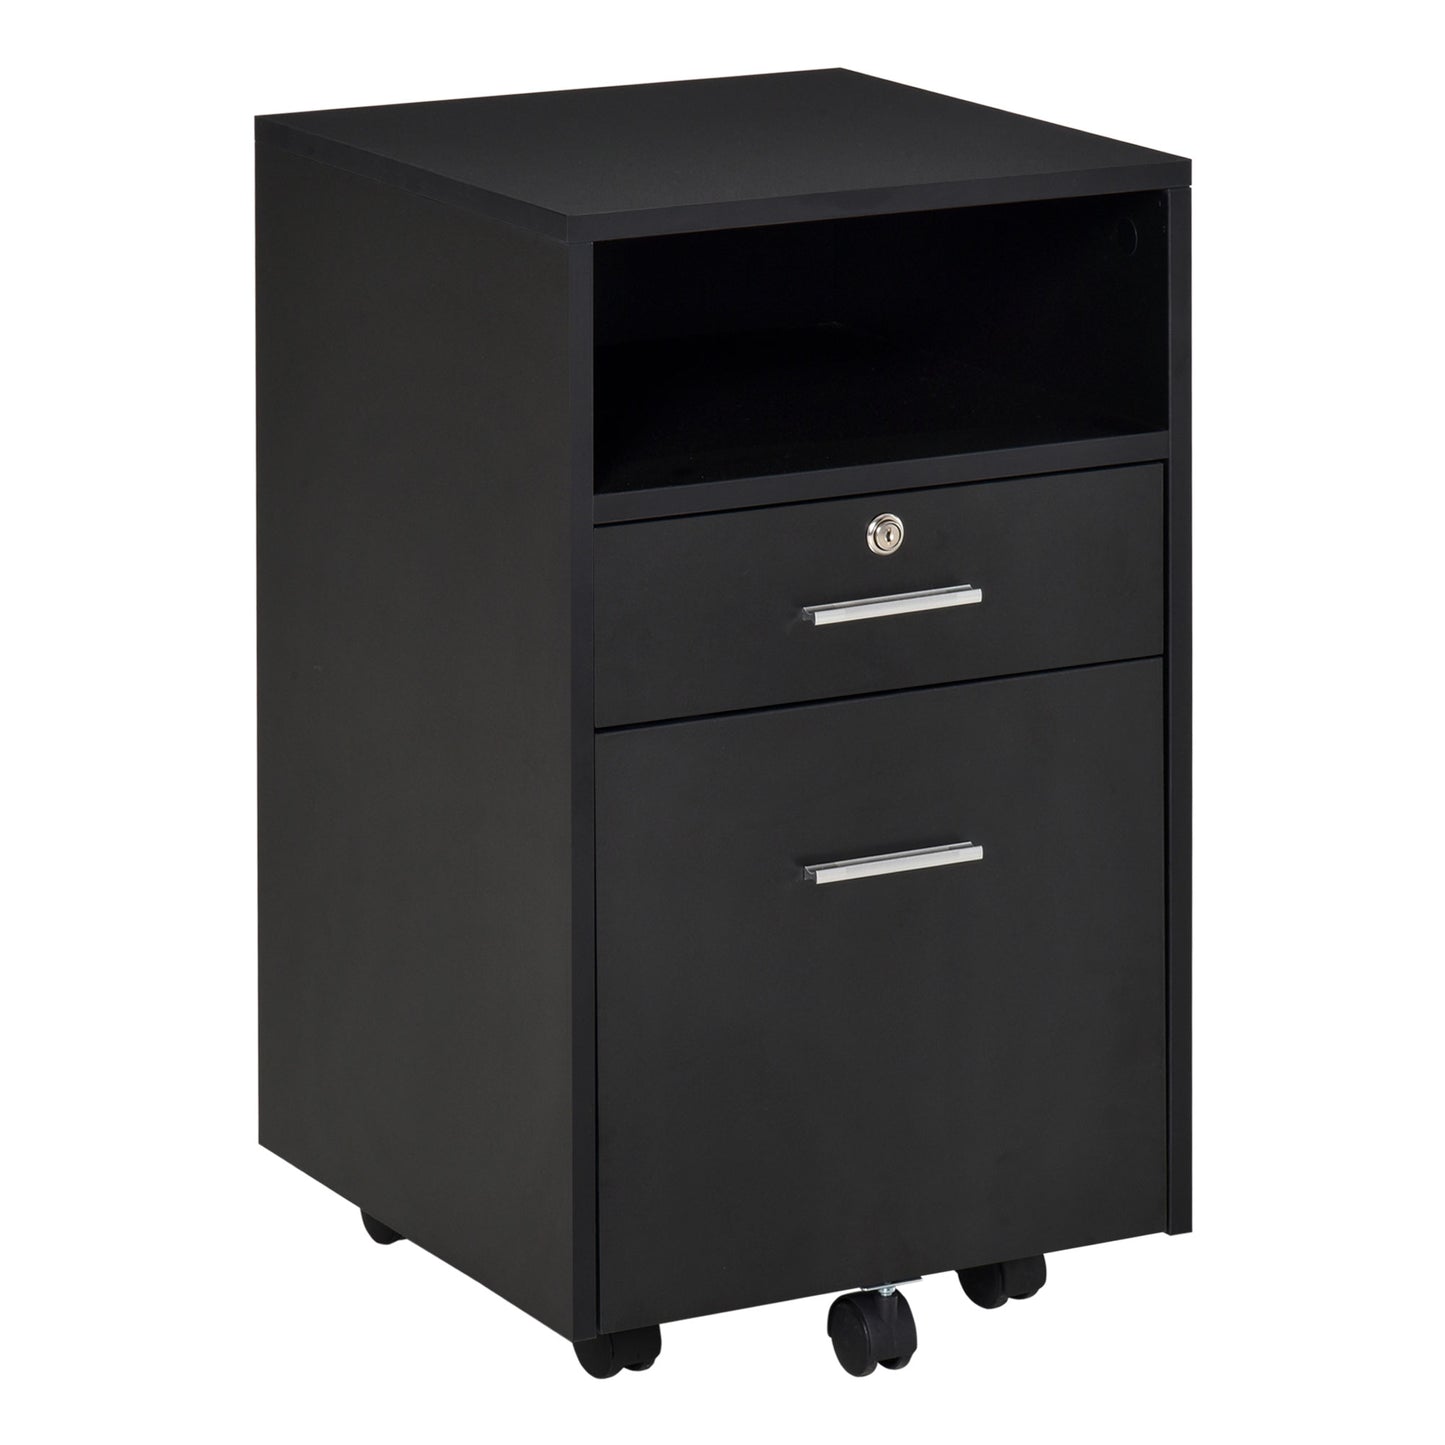 Vinsetto Mobile File Cabinet Home Filing Furniture w/ Lock, Adjustable Partition